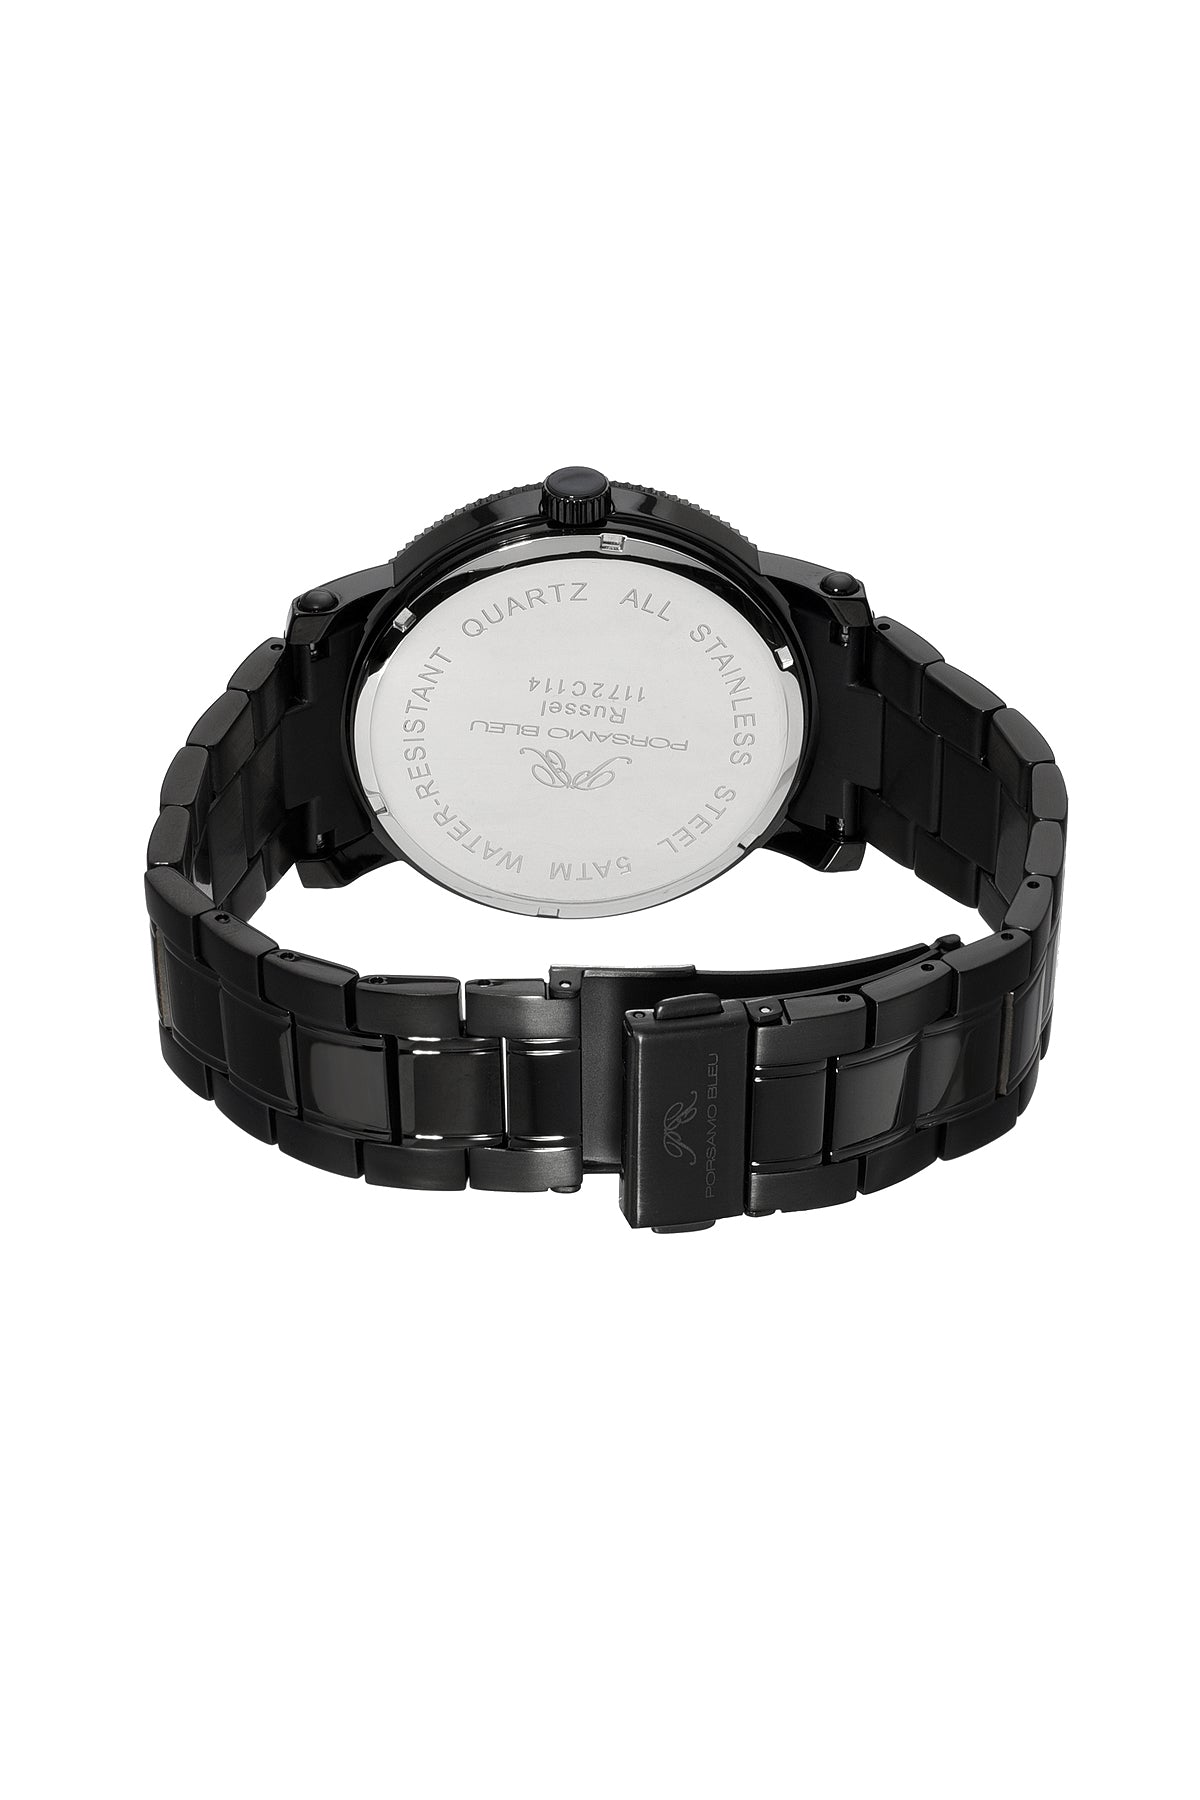 Porsamo Bleu Russel Luxury Multi Function Men's Stainless Steel Watch Silver, Black, Blue 1172CRUS